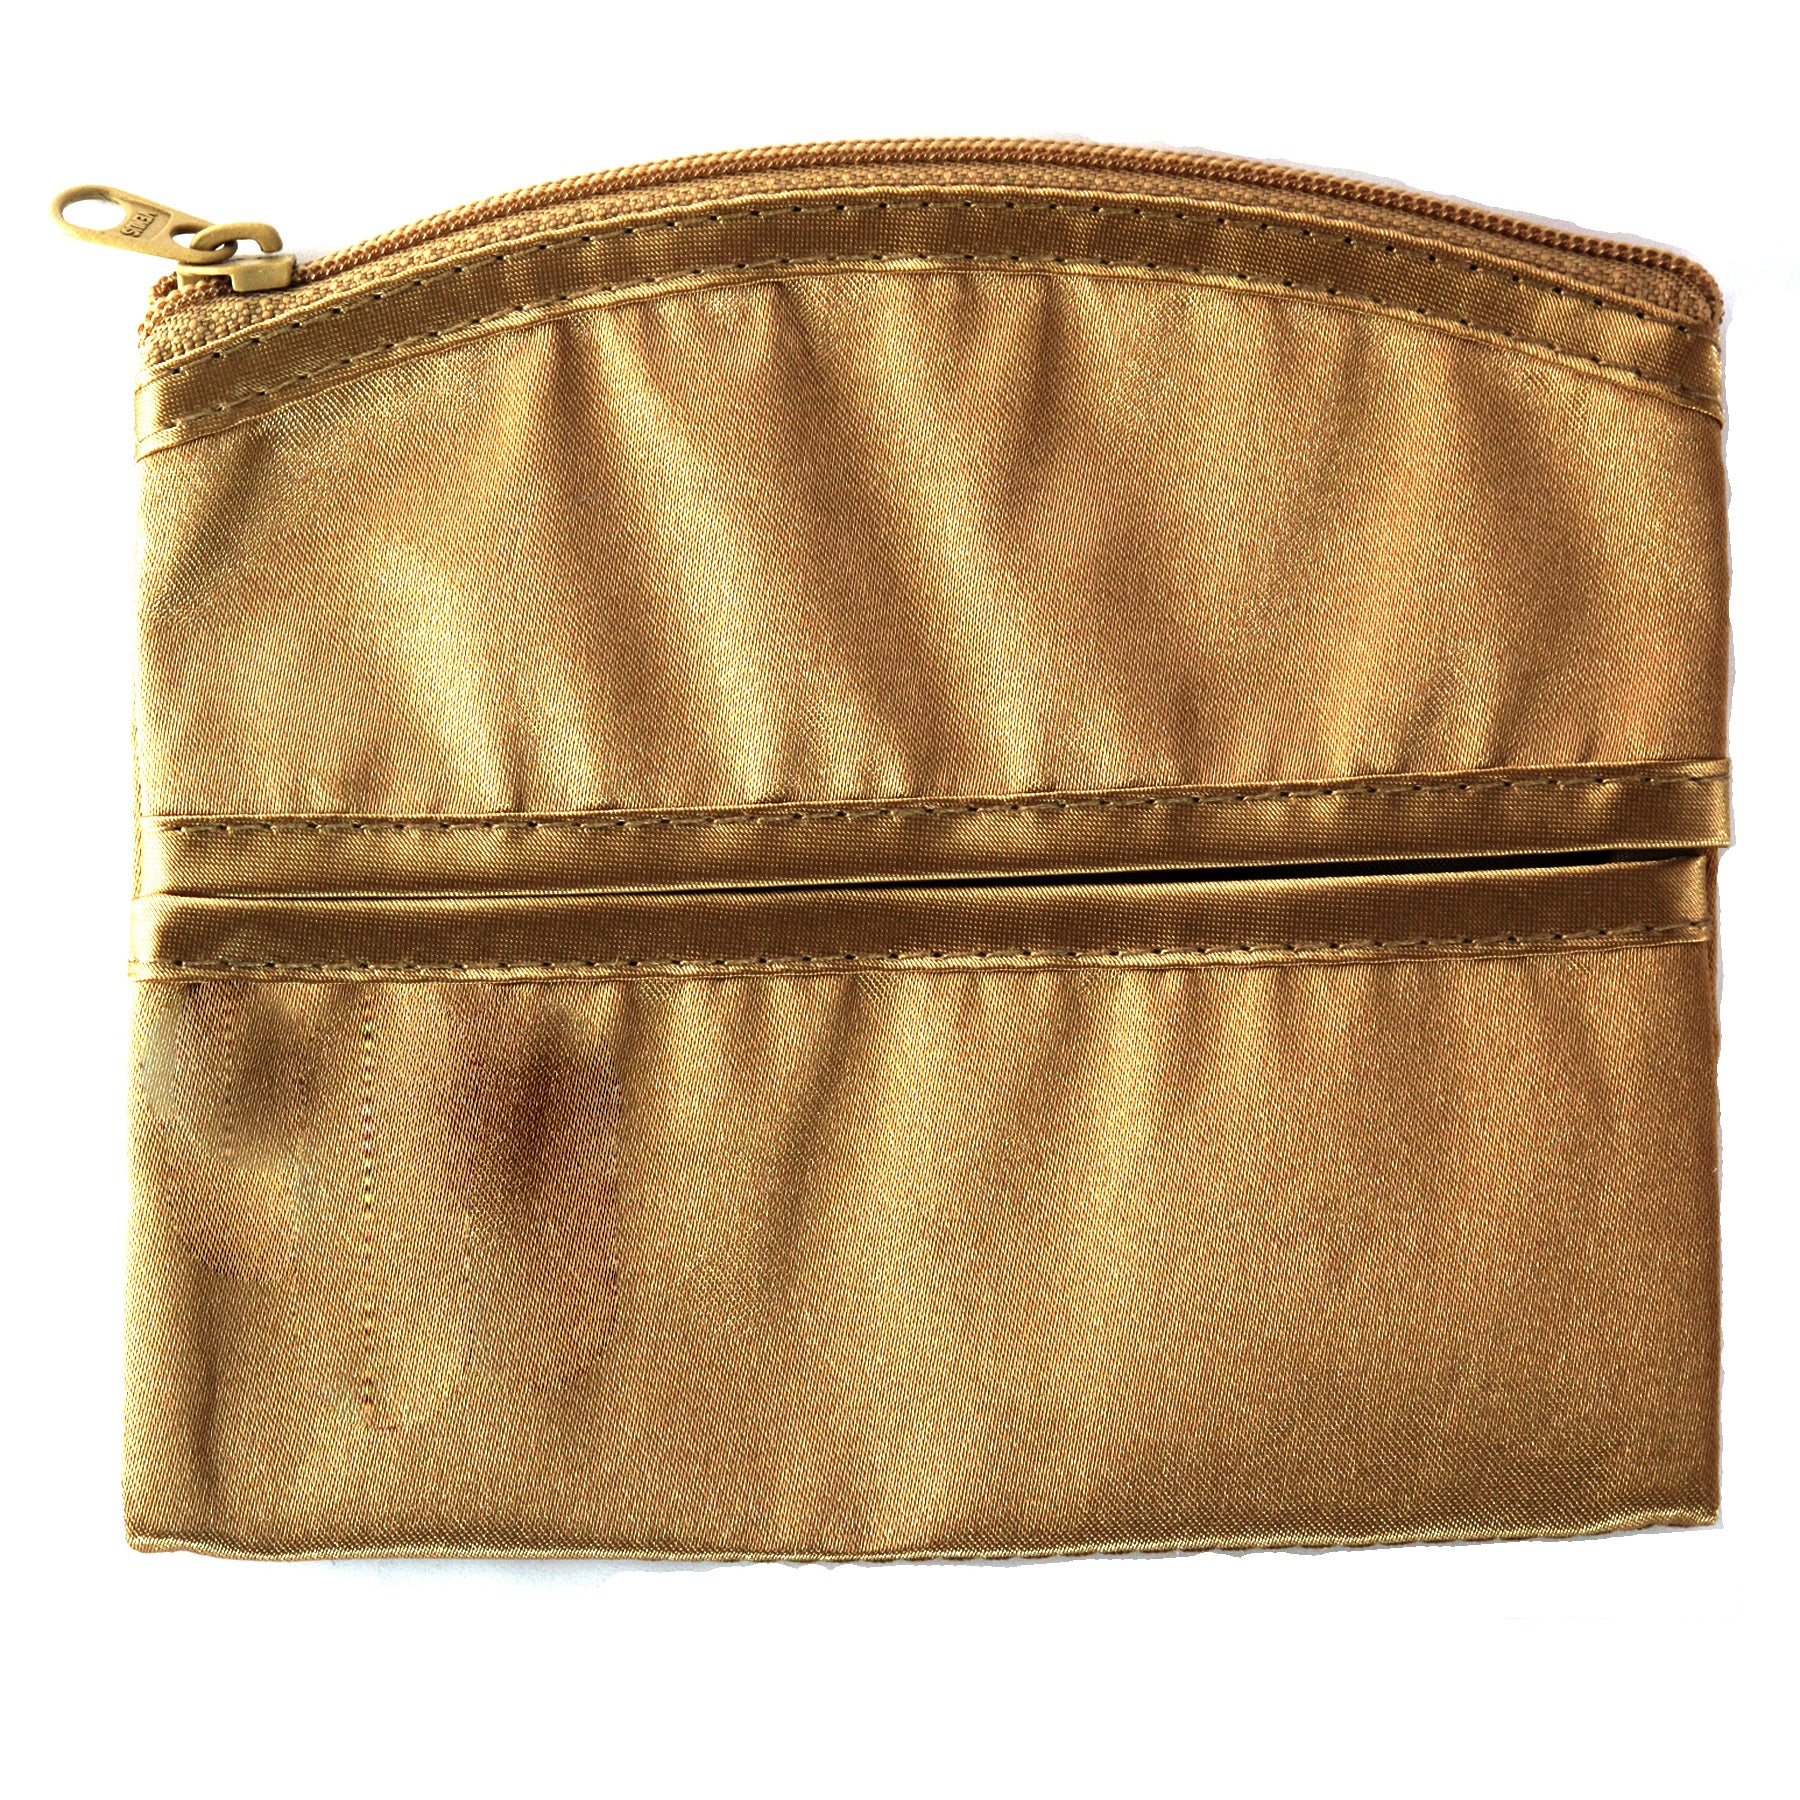 Handmade fabric coin purse 100%cotton leopard print canvas | eBay